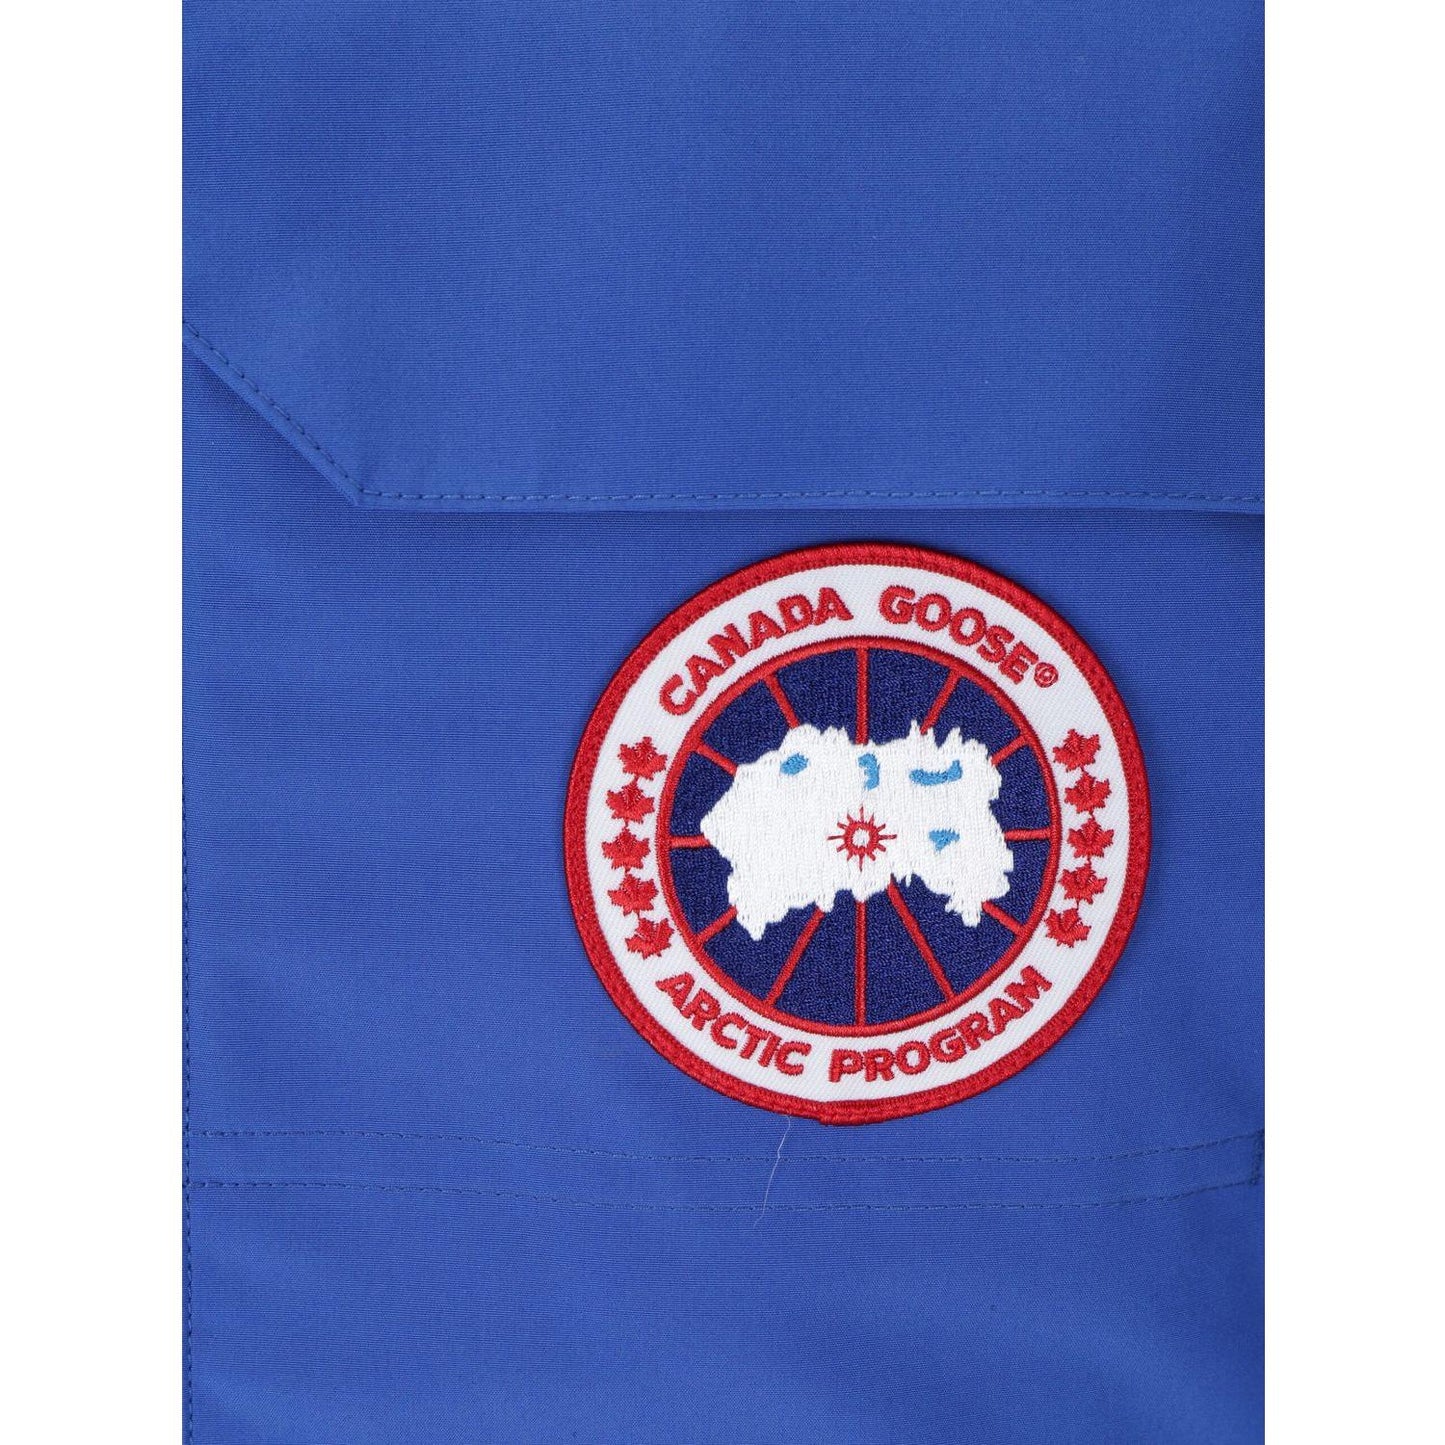 Canada Goose Stylish Royal Blue Expedition Jacket royal-blue-expedition-jacket